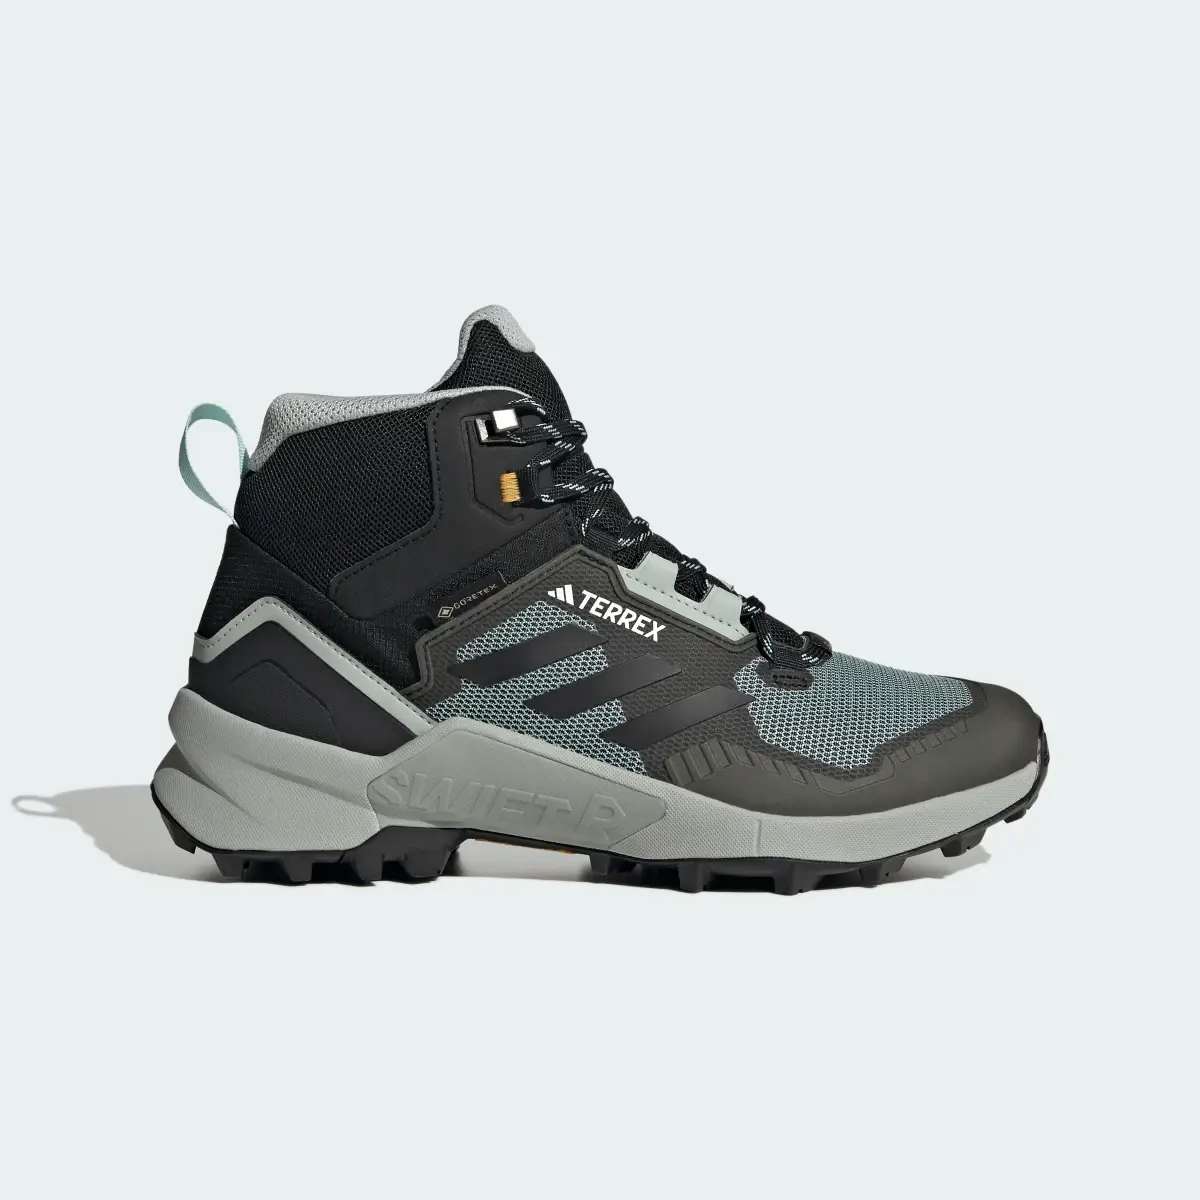 Adidas Terrex Swift R3 Mid GORE-TEX Hiking Shoes. 2